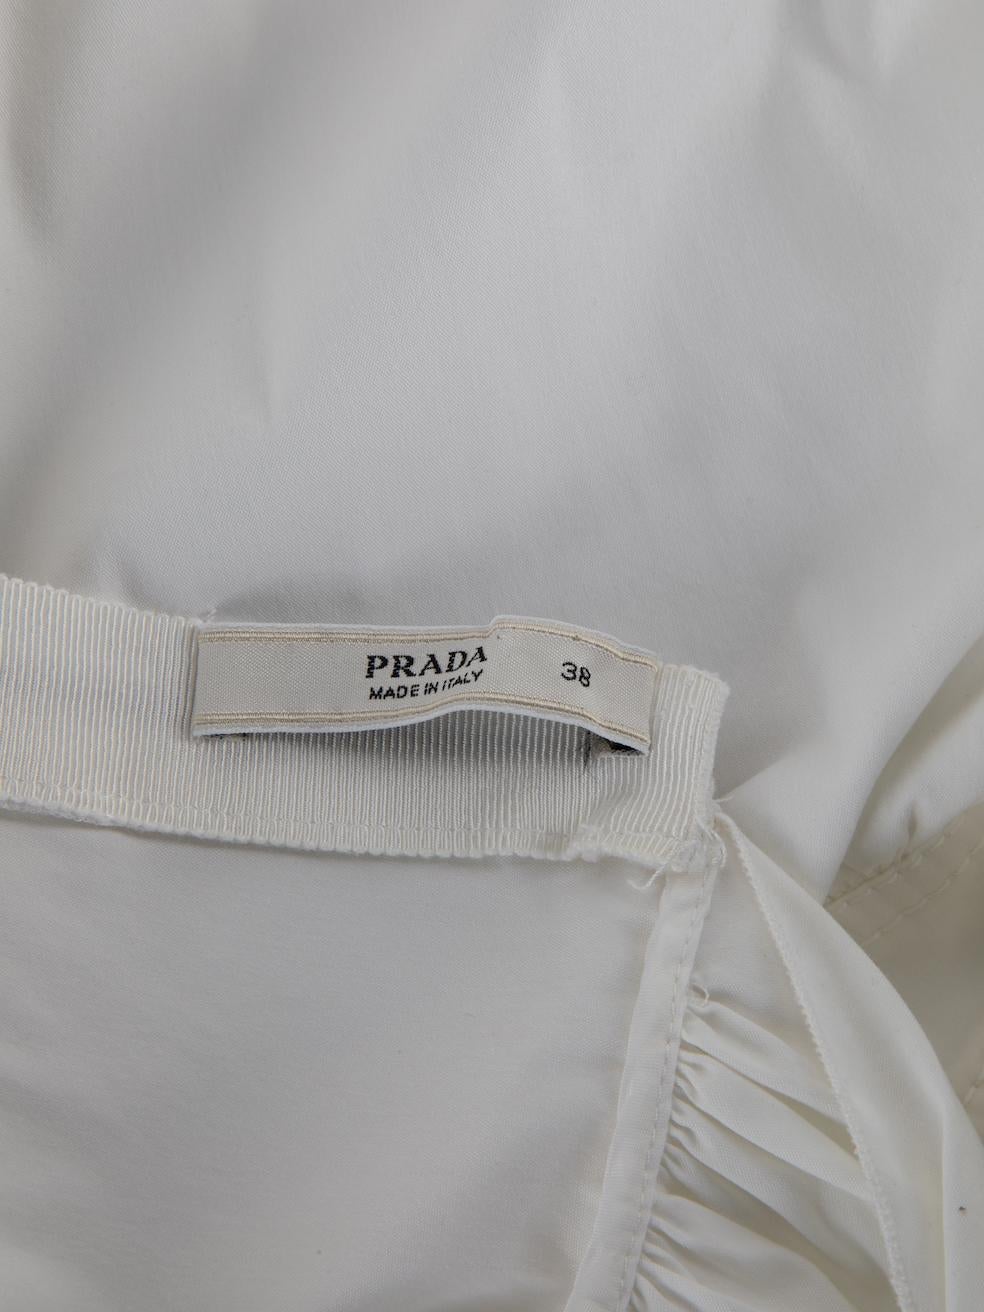 Prada Women's White Tie Accent Peplum Blouse For Sale 1